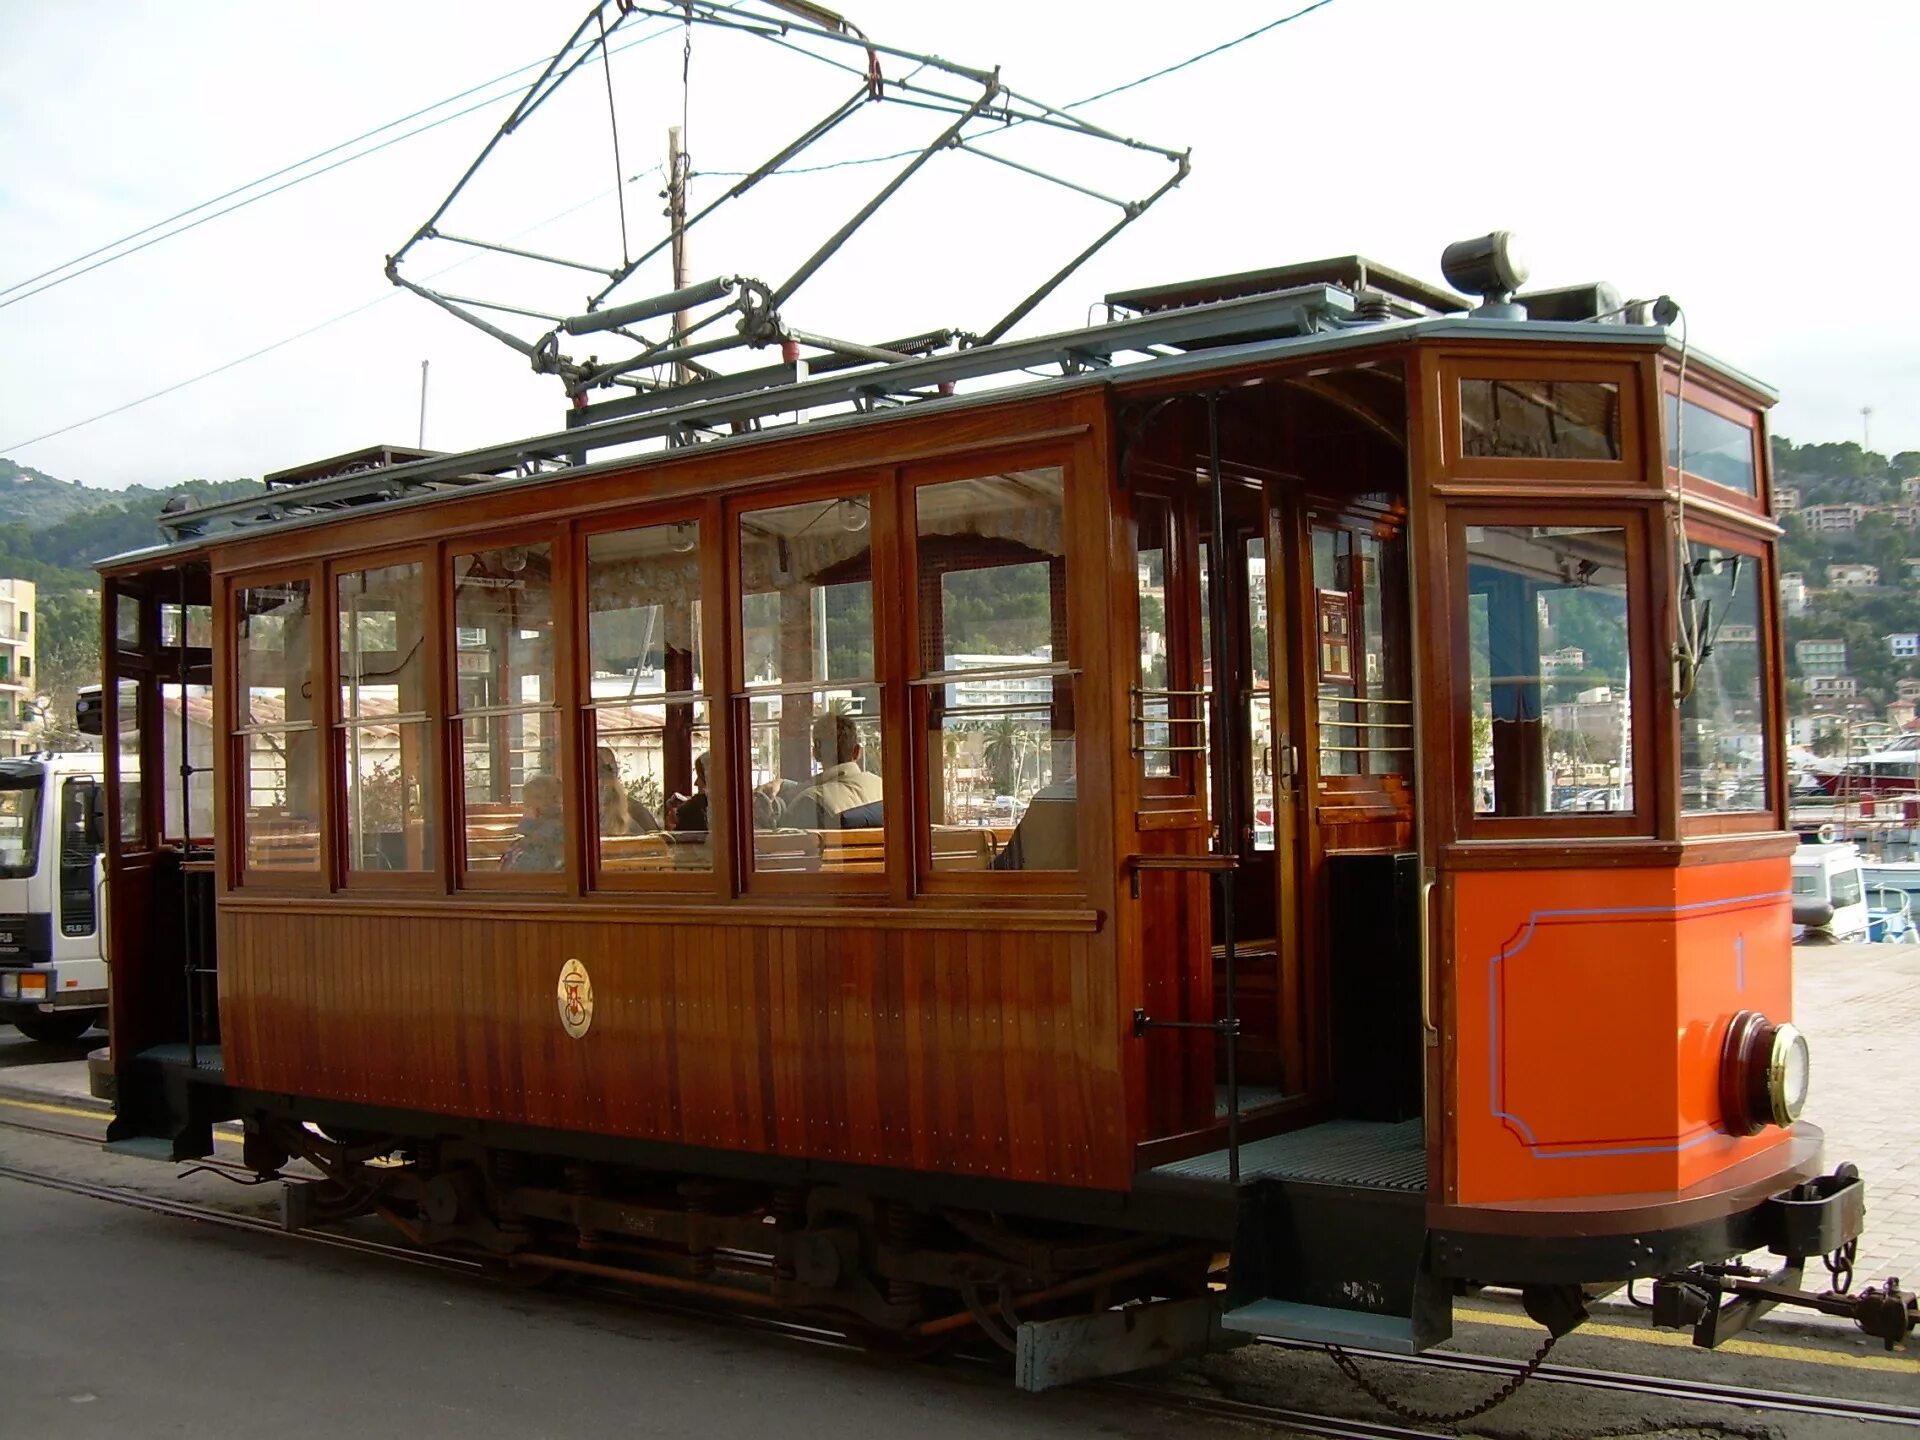 Трамвай первые 25. Трамвайный вагон МС-1. Сименс трамвай 1881 Вернер. Трамвайный вагон МС-1 1877. Старинный трамвай.